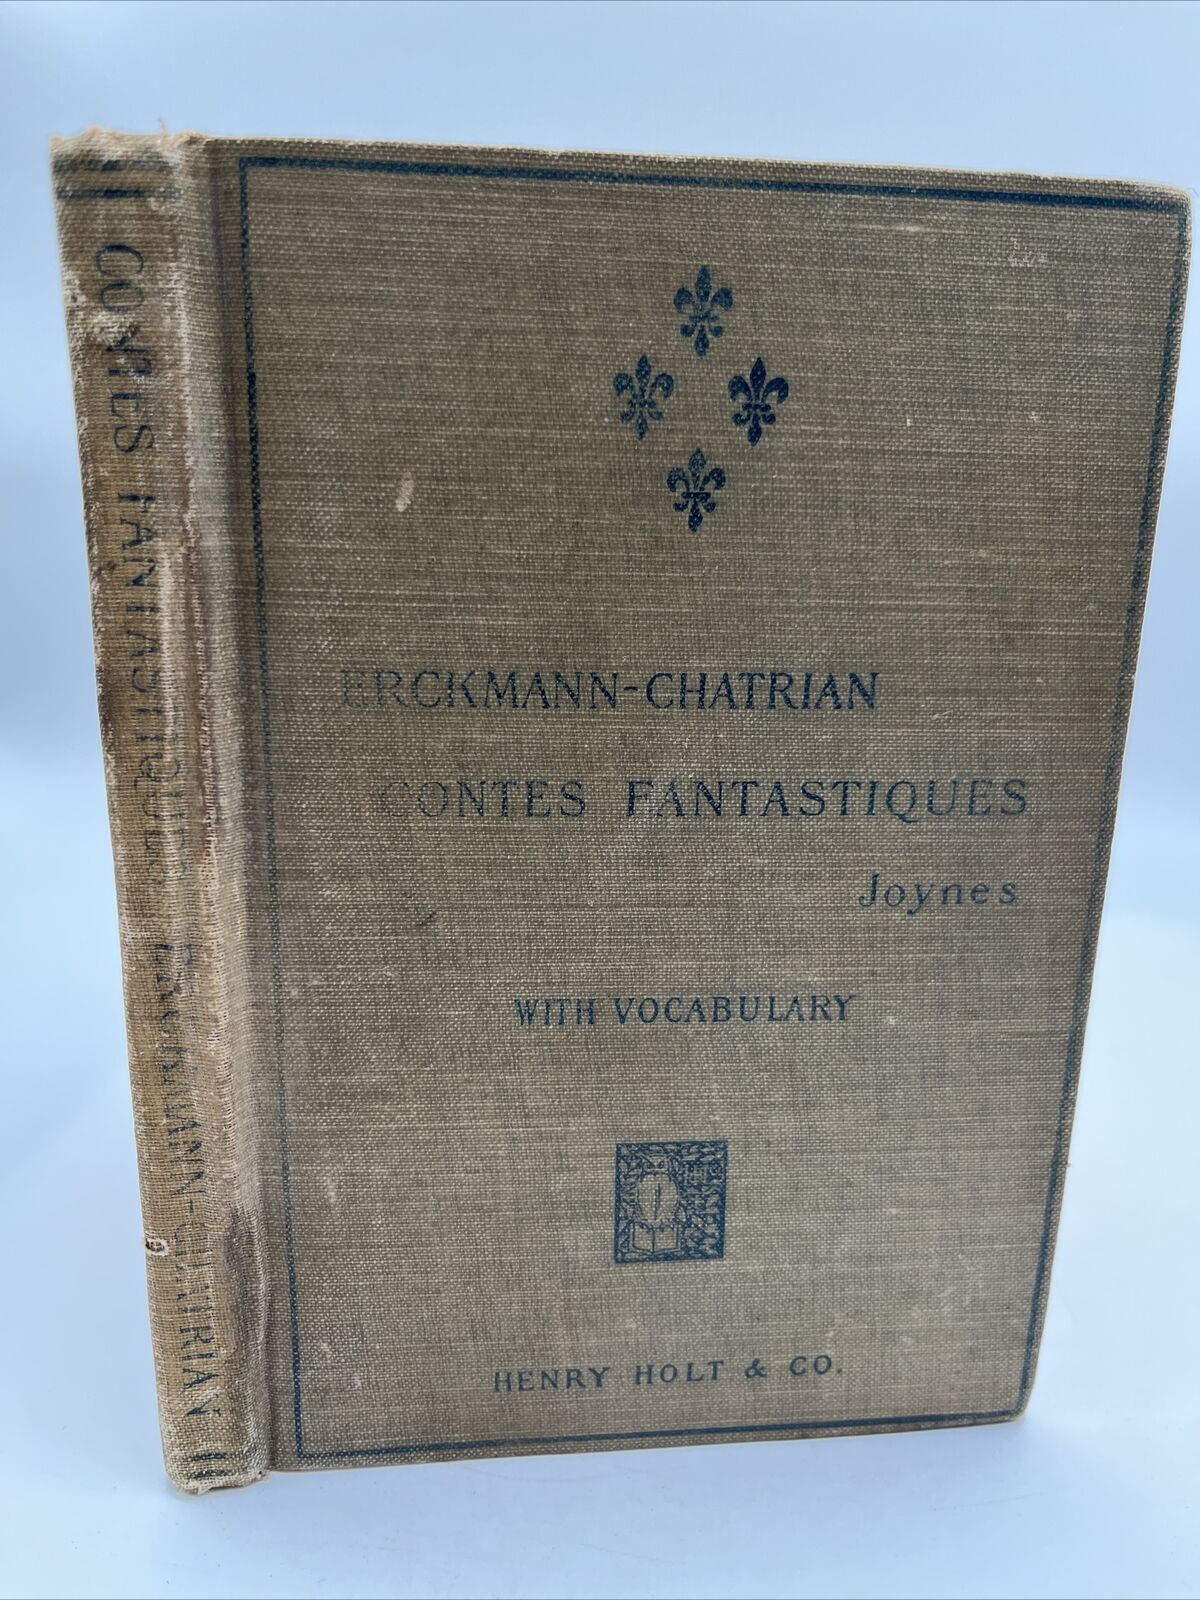 ERCKMANN-CHATRIAN - Contes fantastique - 1899 Rare Antique Hardback